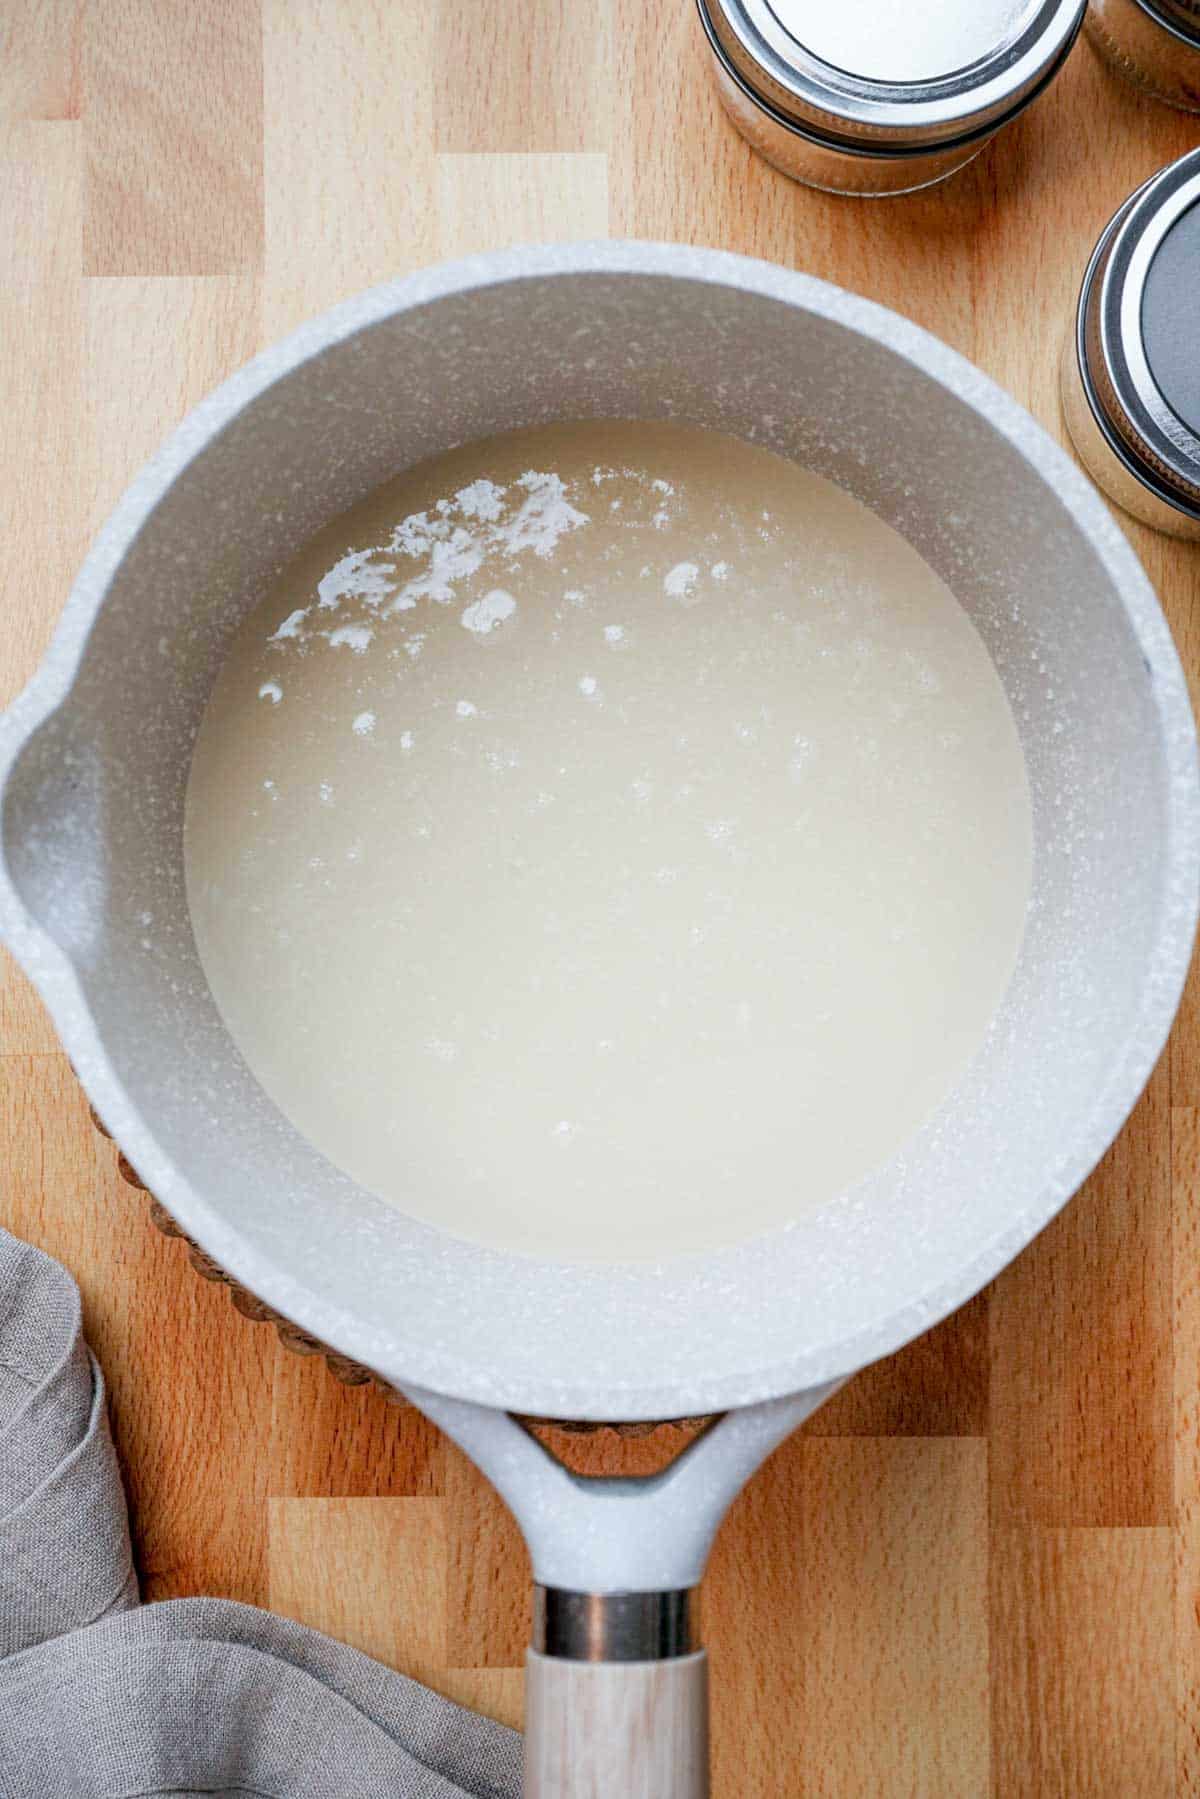 a pot of white liquid